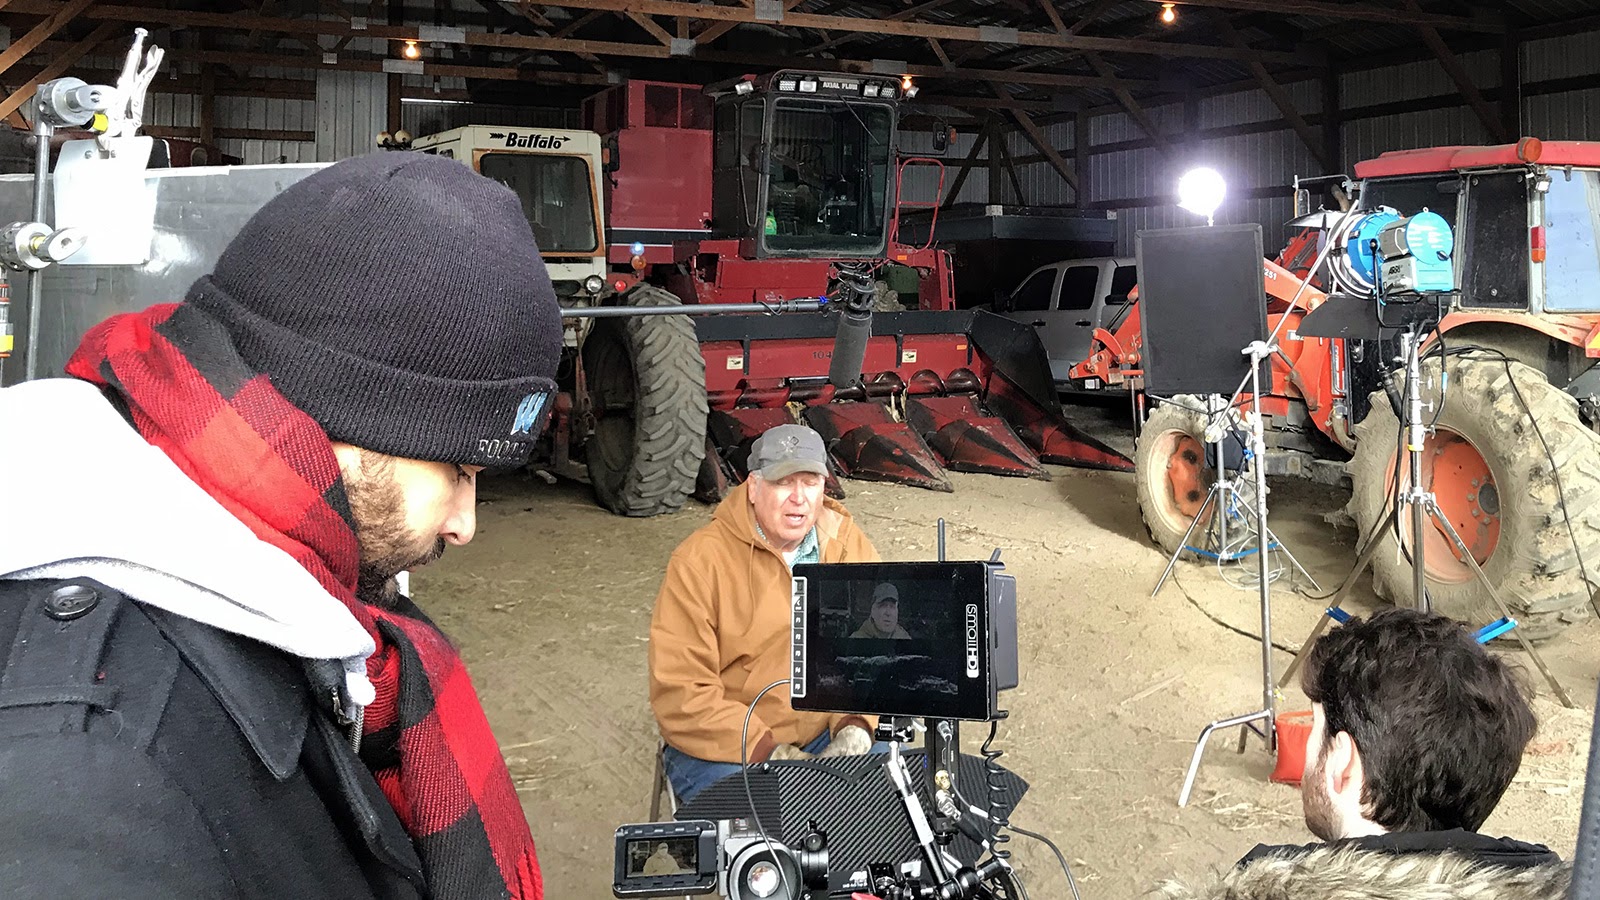 Camera crew shooting in rural location